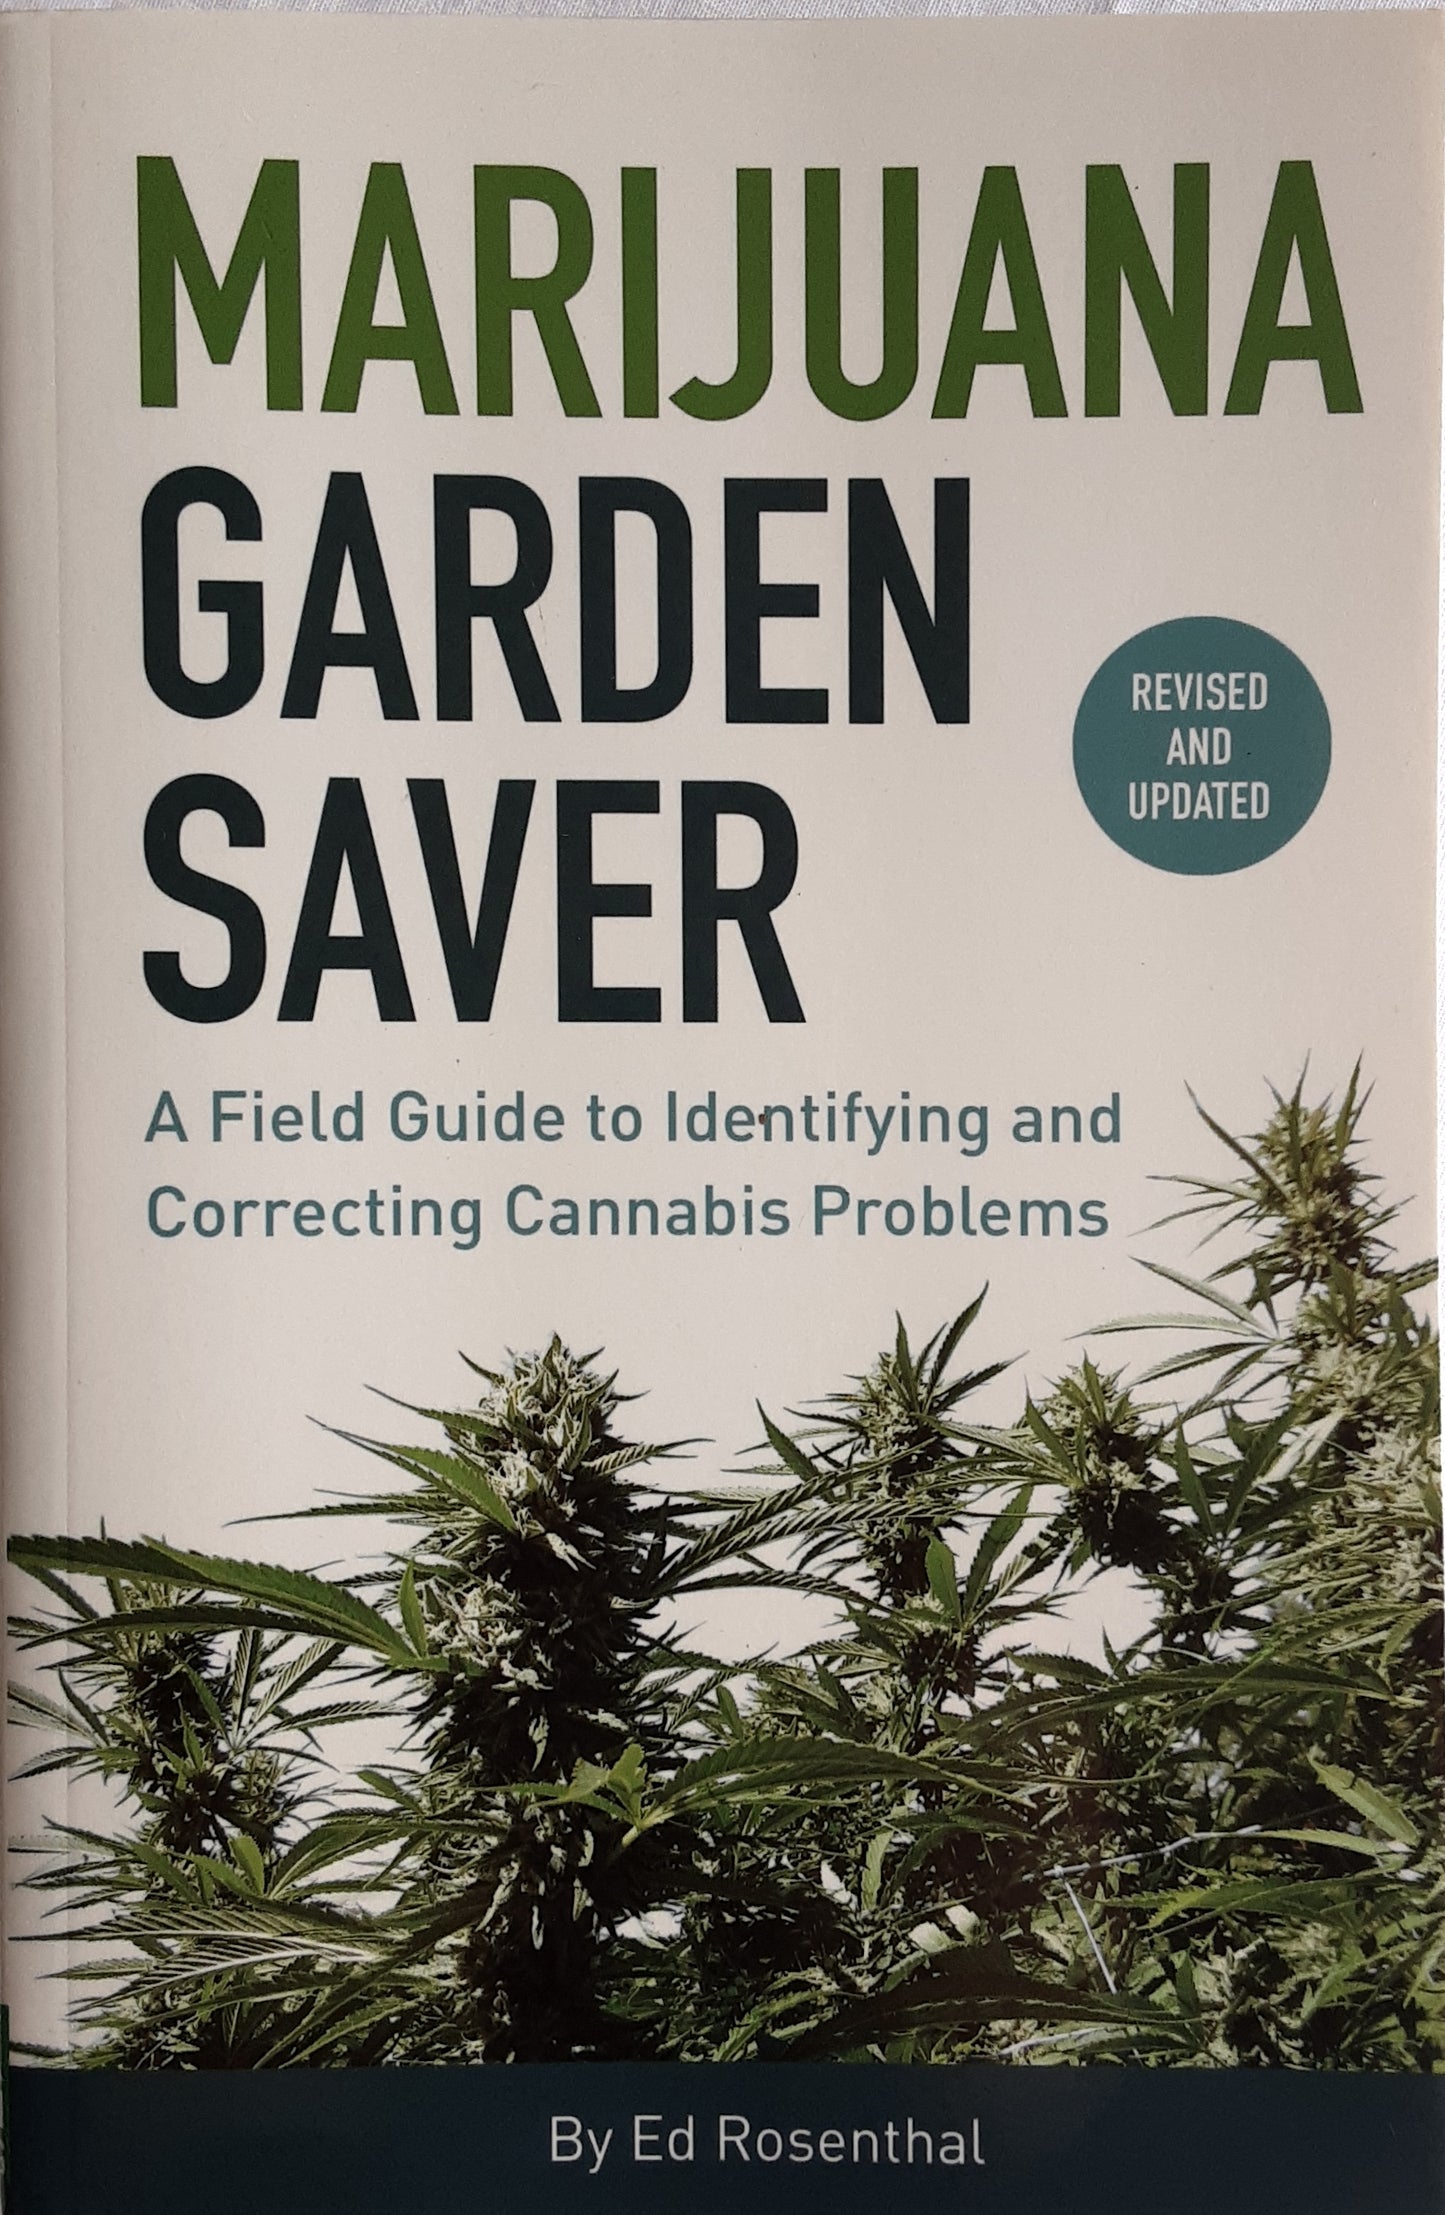 Marijuana Garden Saver by Ed Rosenthal